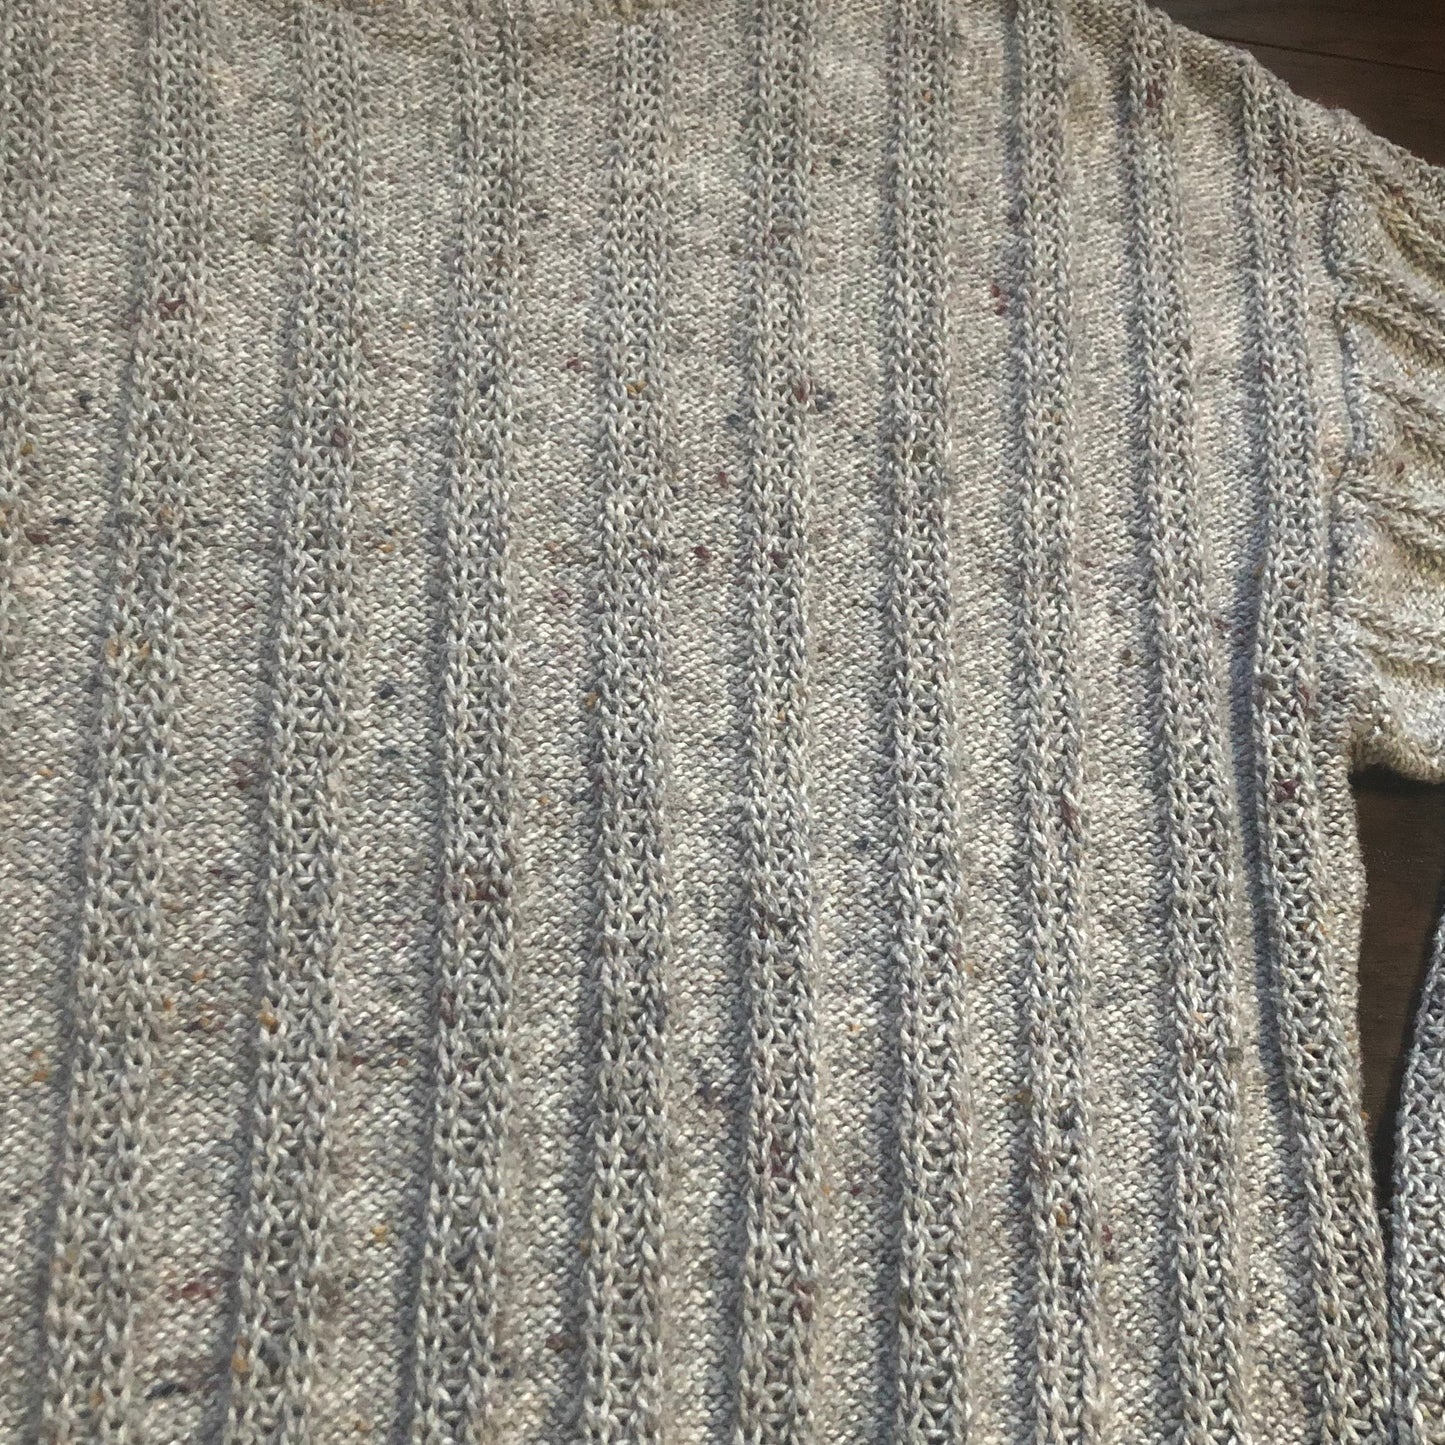 80’s Vintage Men’s OshKosh B’Gosh Pullover Sweater | Made in USA